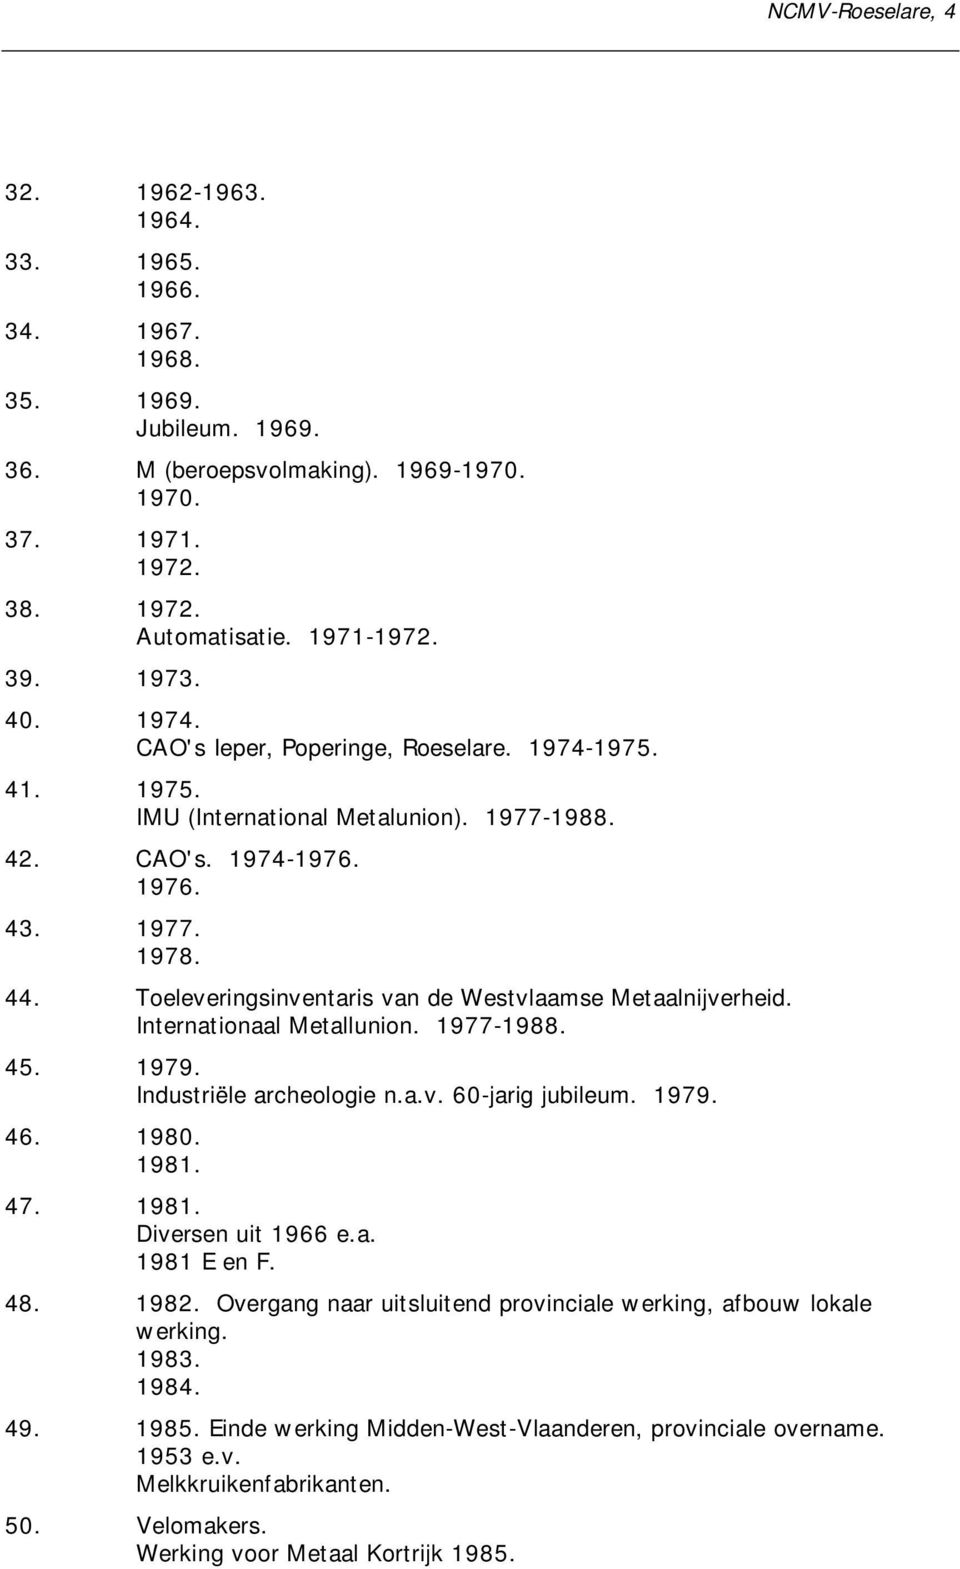 Toeleveringsinventaris van de Westvlaamse Metaalnijverheid. Internationaal Metallunion. 1977-1988. 45. 1979. Industriële archeologie n.a.v. 60-jarig jubileum. 1979. 46. 1980. 1981.